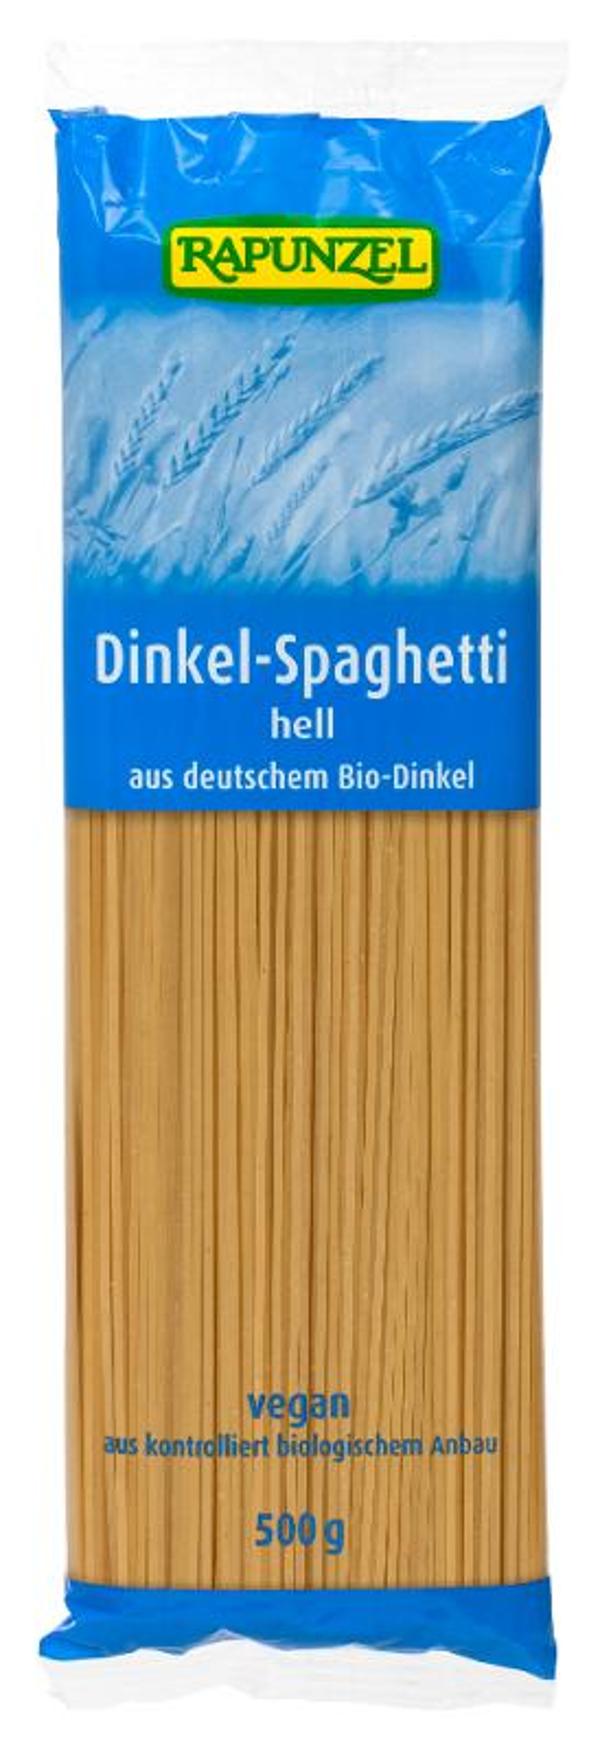 Produktfoto zu Dinkel-Spaghetti hell 500g